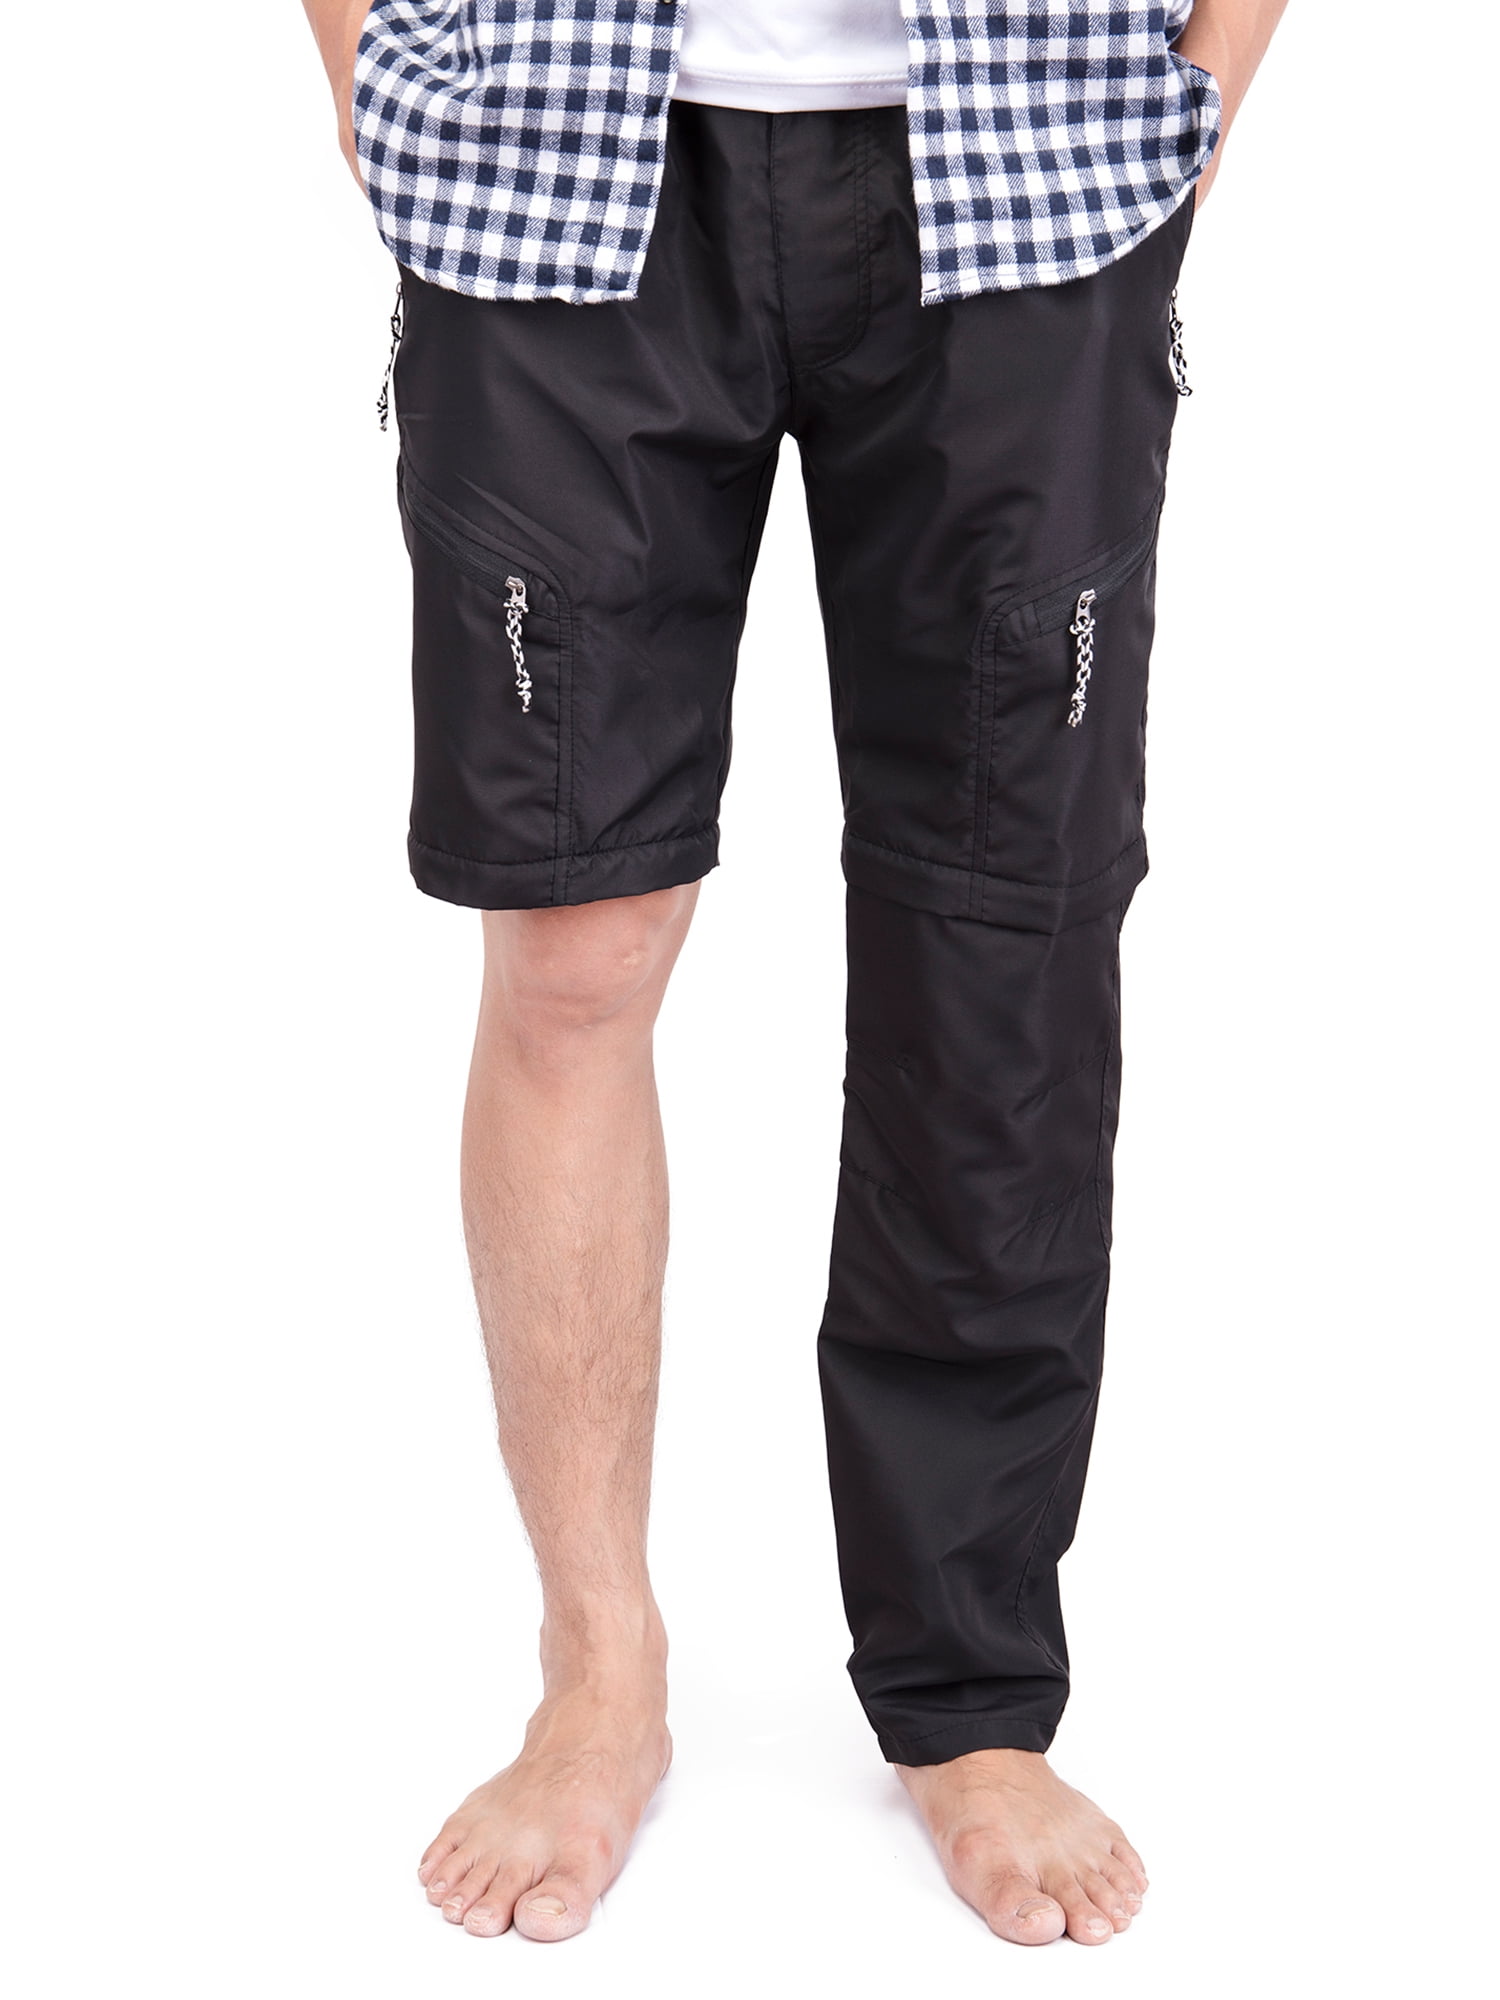 Convertible Men's Quick Drying Pants Shorts Zipper Pocket Hiking Cargo Trousers 